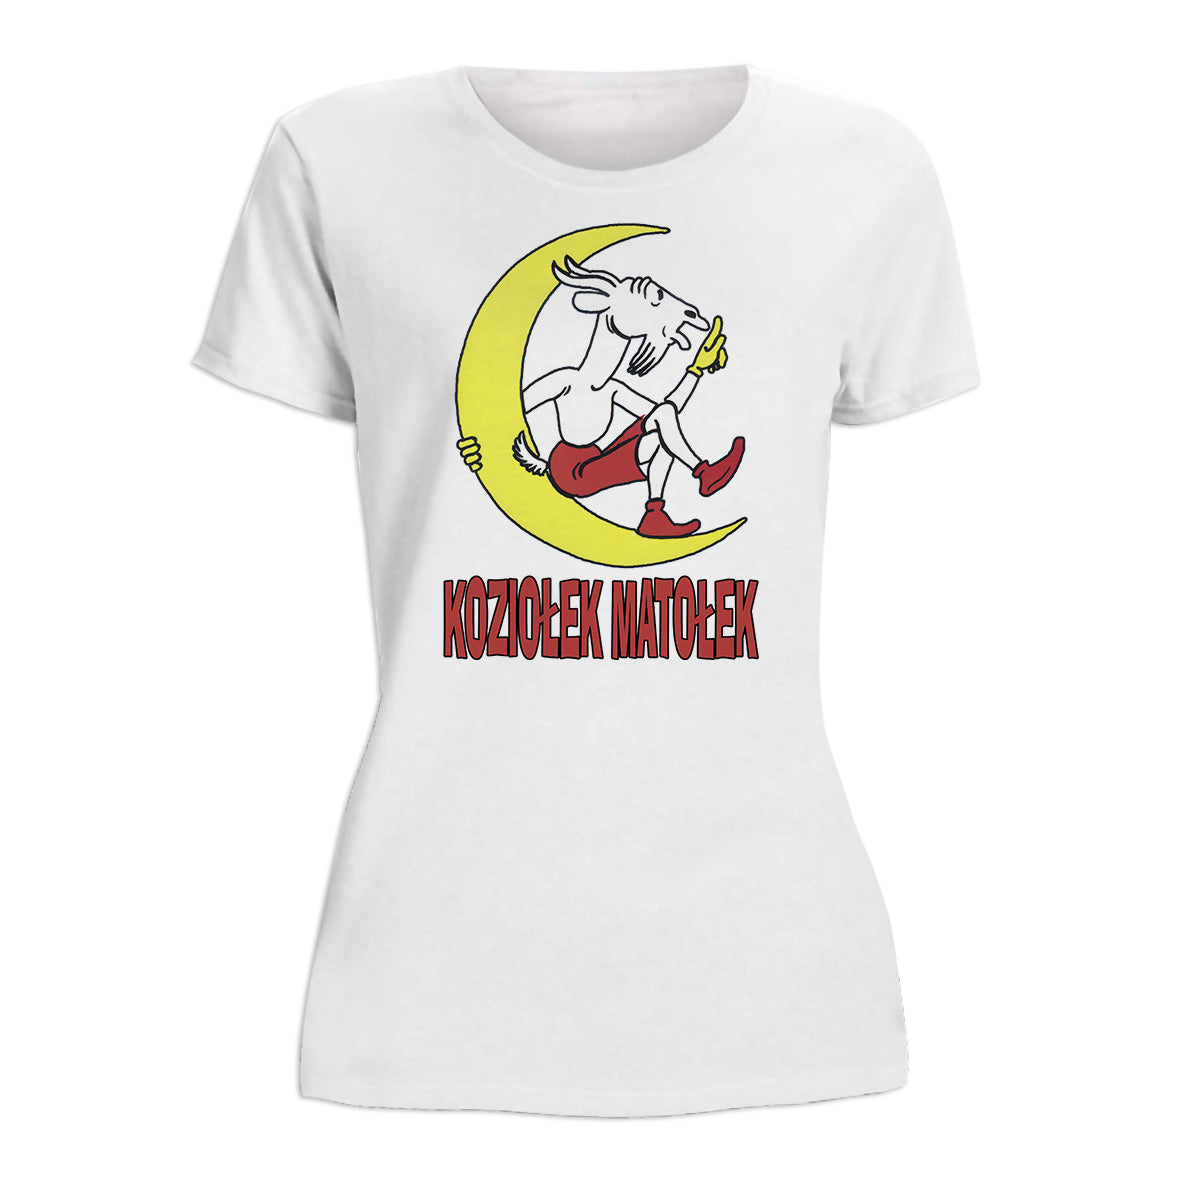 Koziolek Matolek Moon Women's Short Sleeve Tshirt